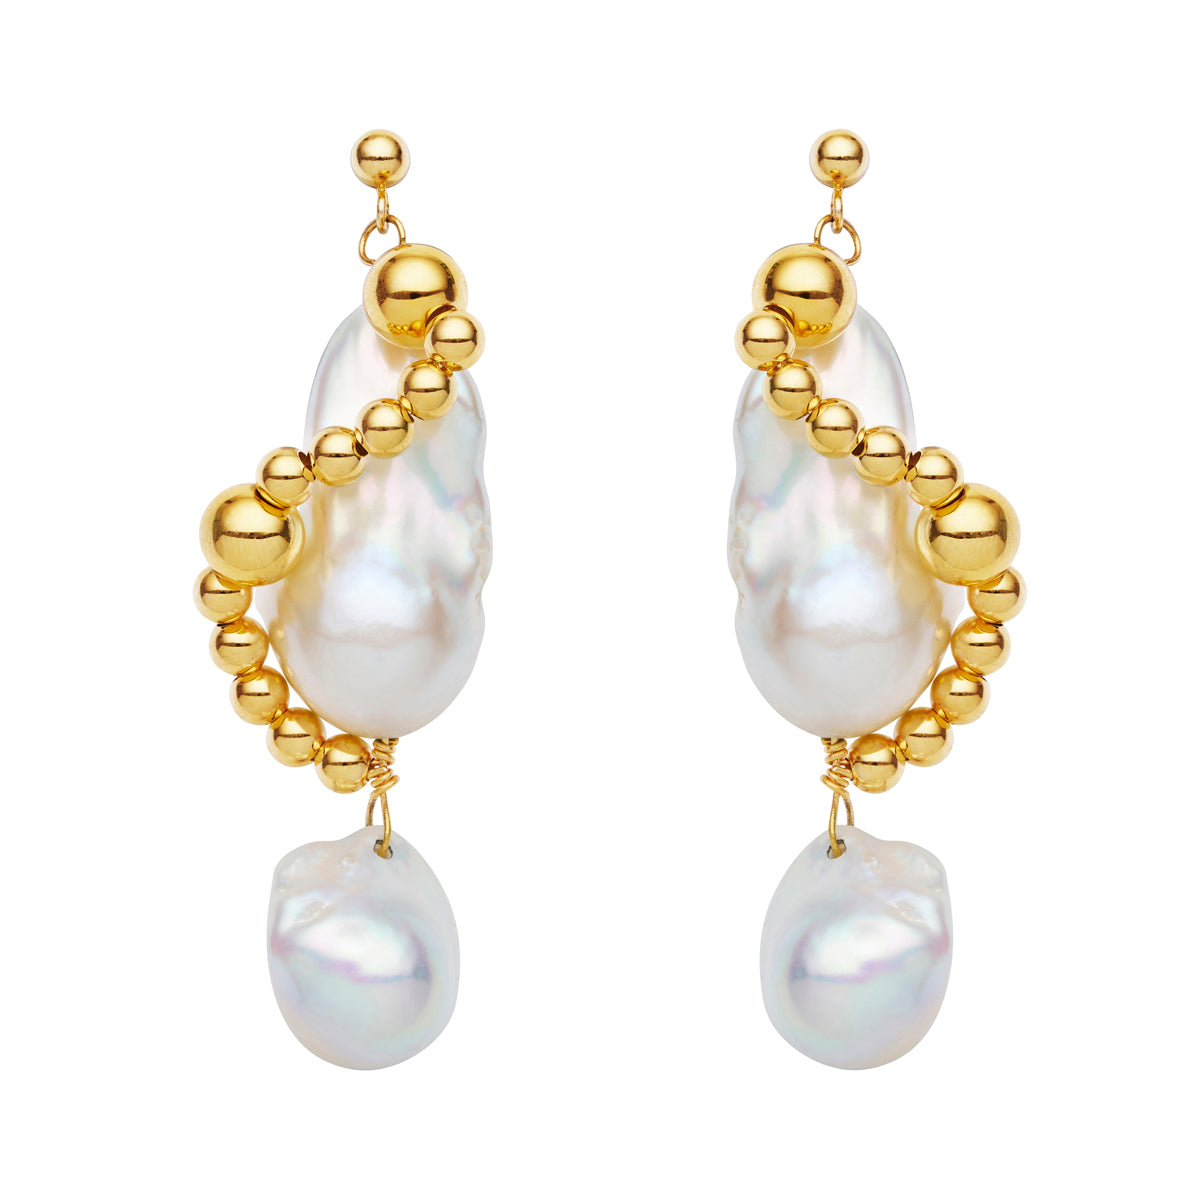 Lucille-earrings-Amber-Sceats.jpg